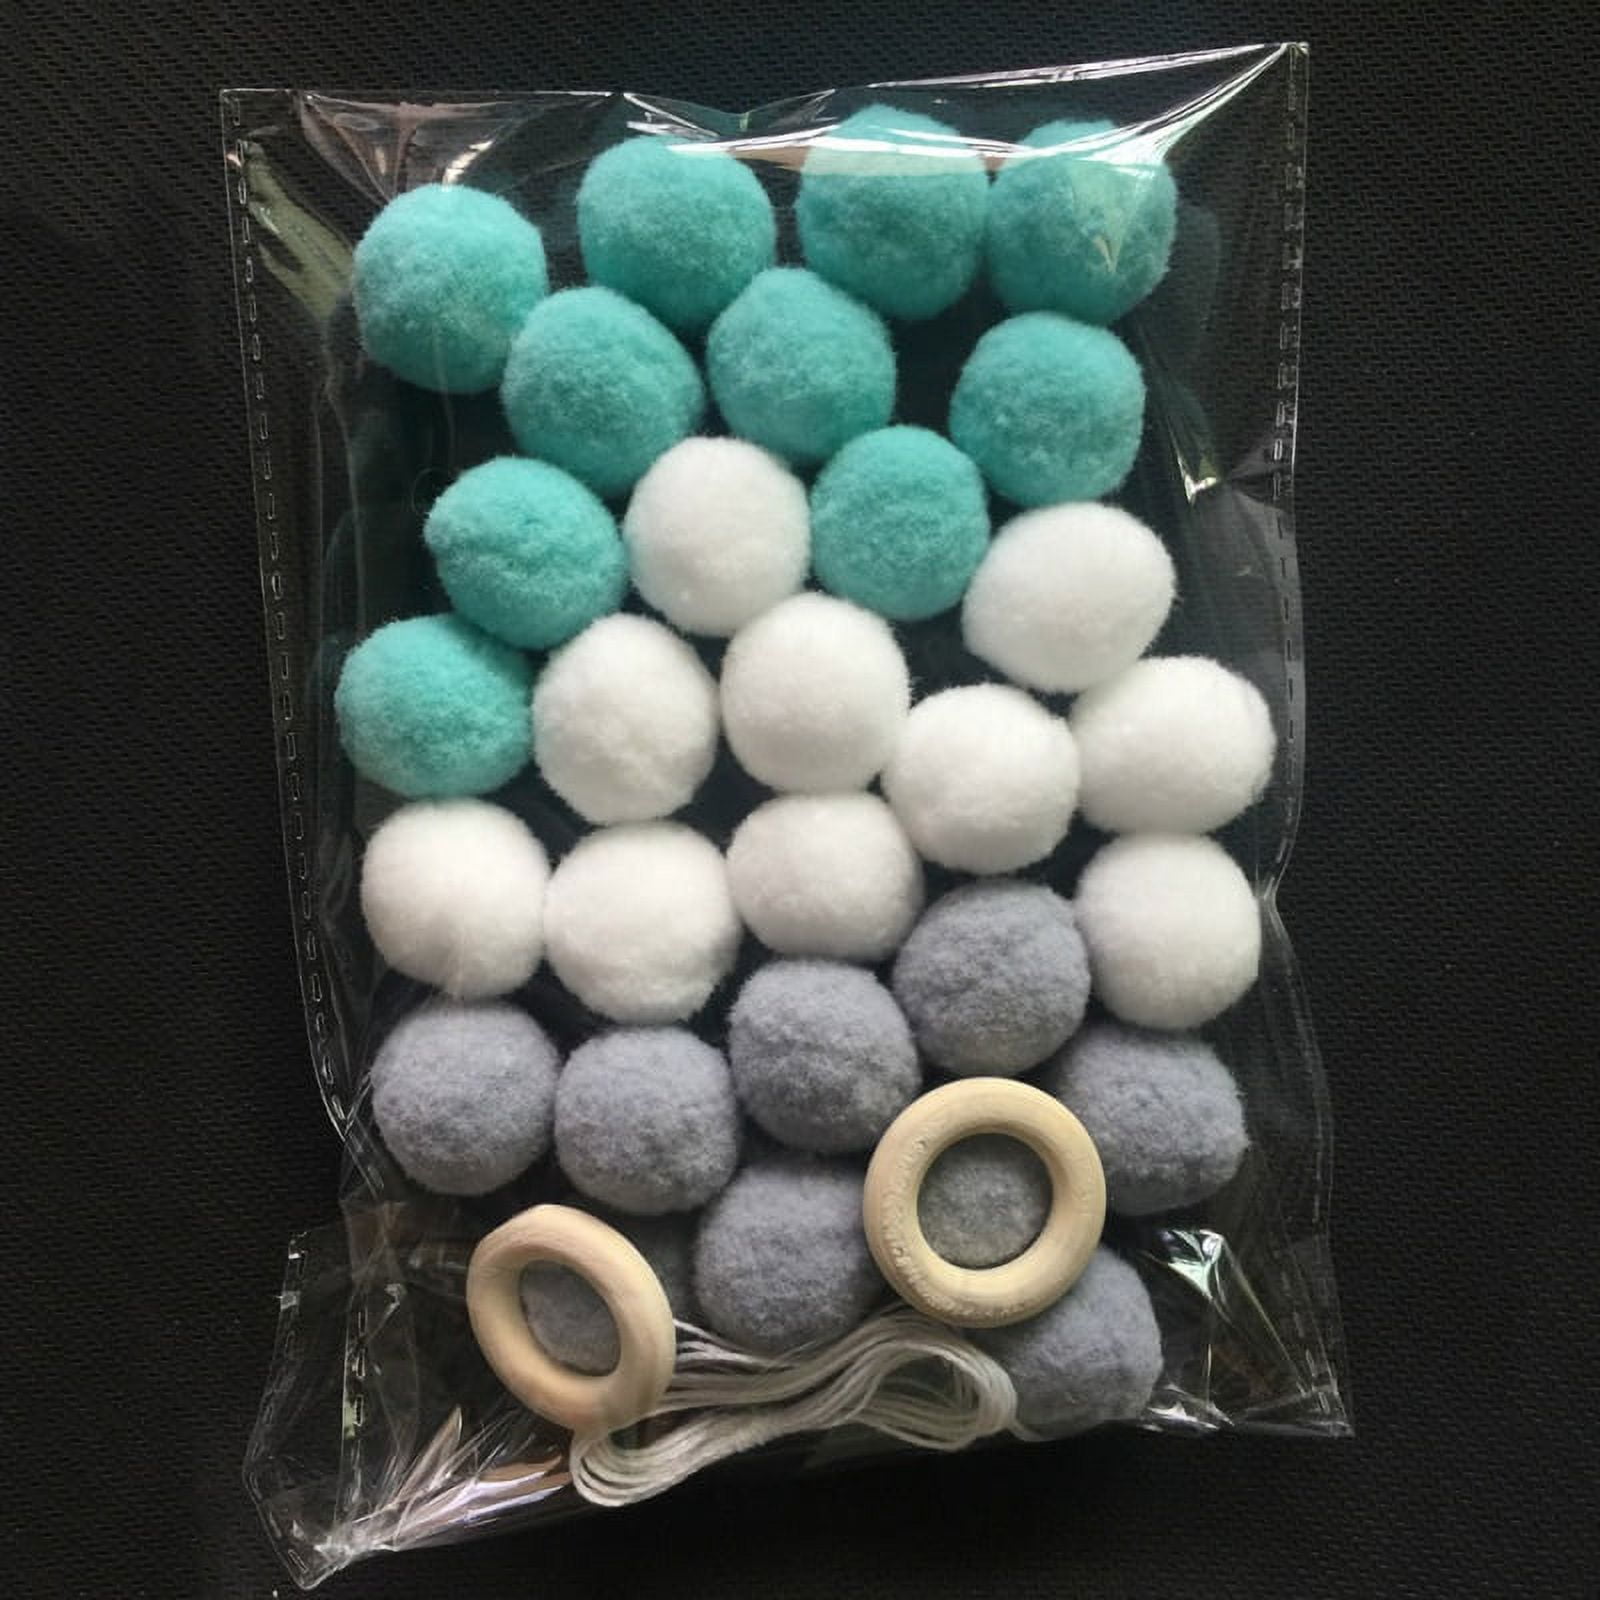 Felt Pom Poms,Wool Felt Balls 60 Pieces,0.6 inch Handmade Felted 40 Colors Bulk Wool Felt Pom Pom Balls Small Puff for DIY Arts,Crafts Projects